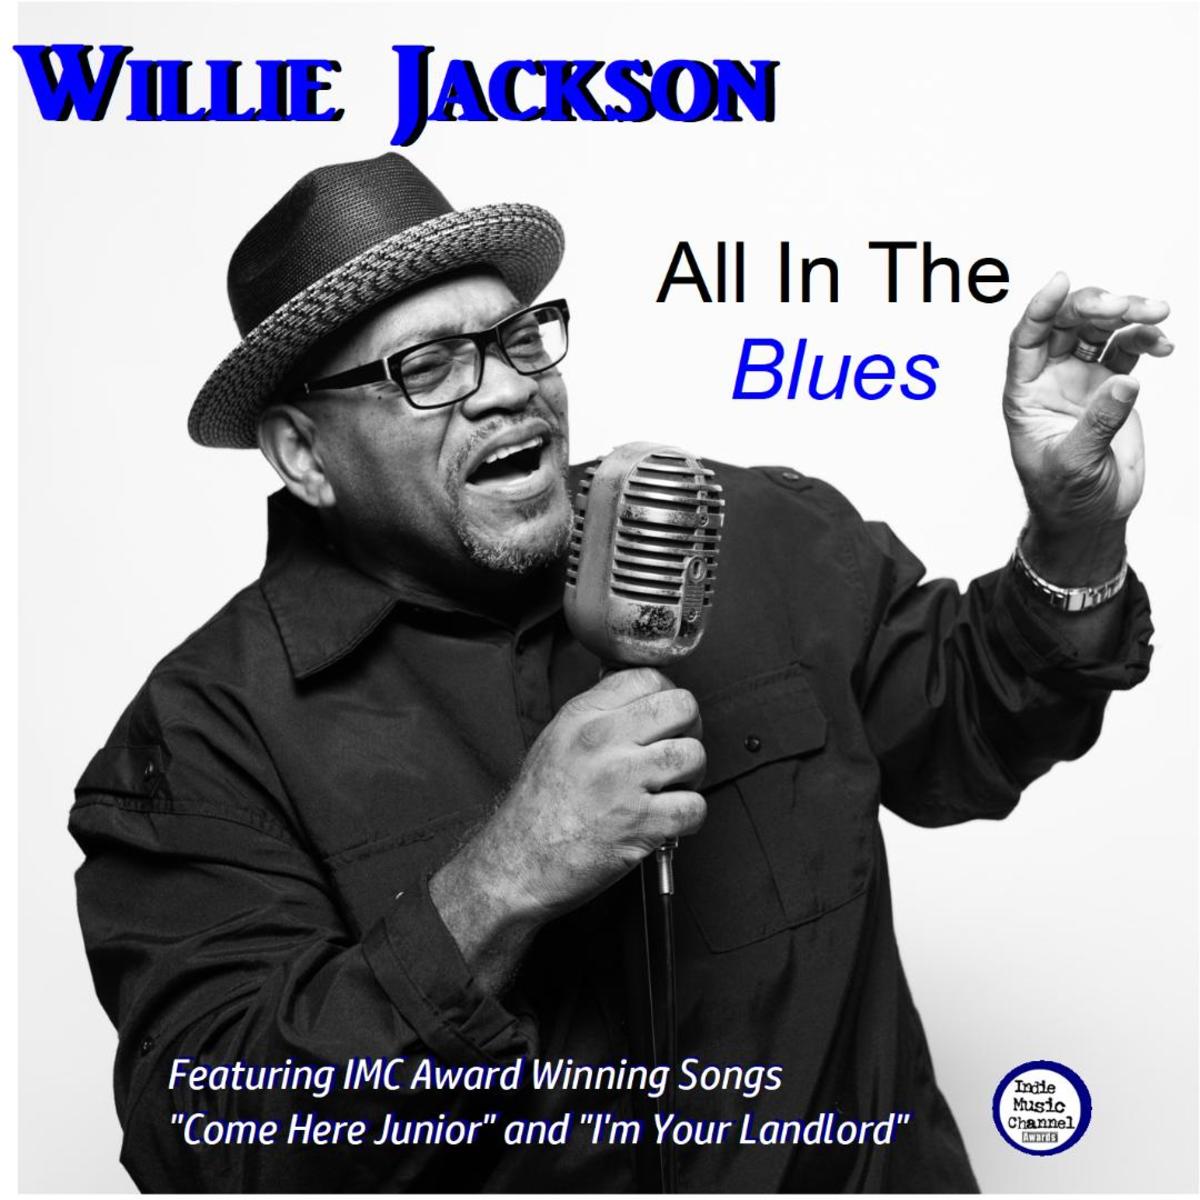 Willie Jackson